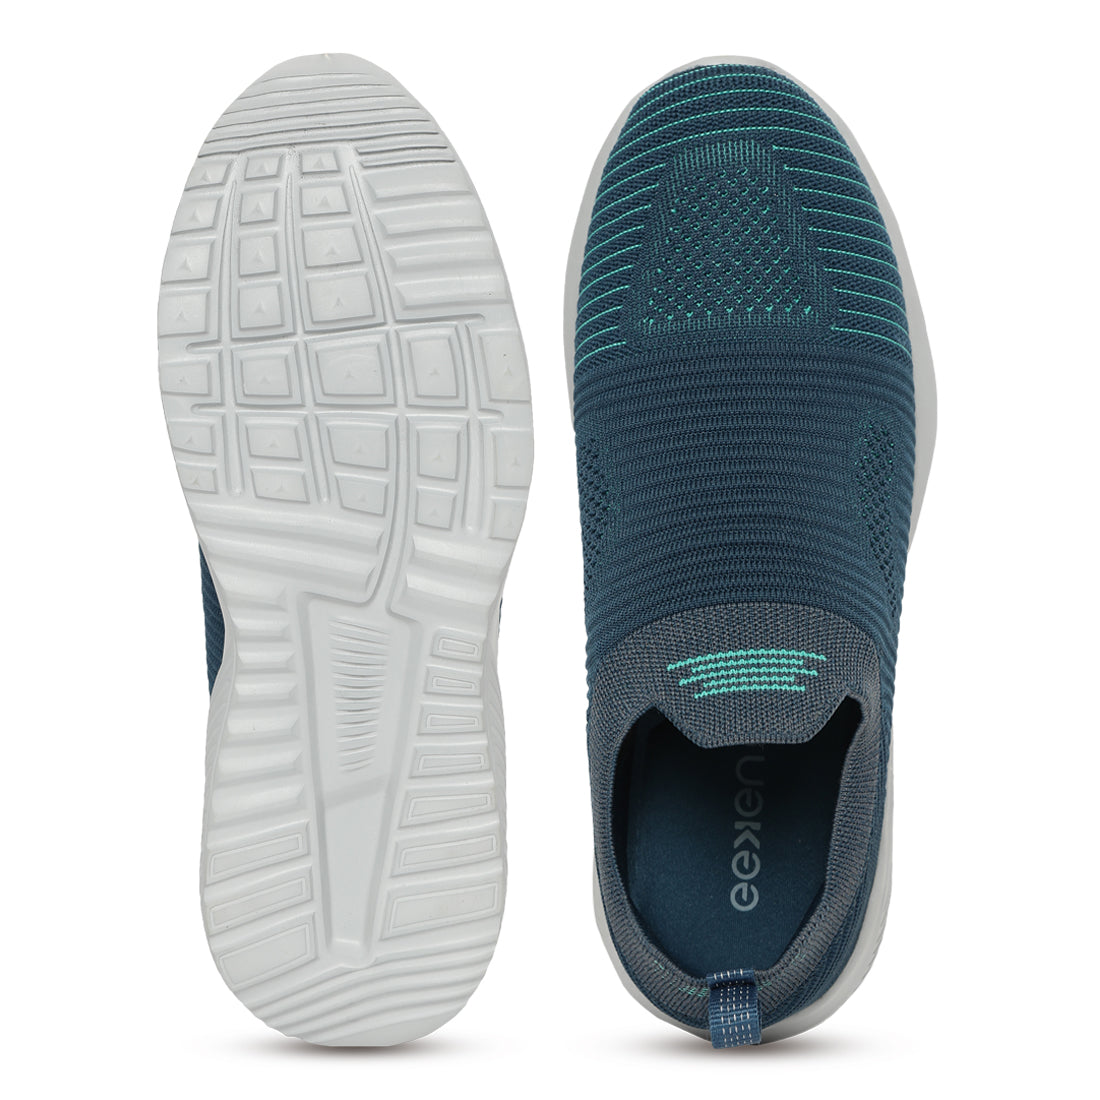 Eeken ESHGIA108 Teal Blue And Sea Green Athleisure Shoes For Men